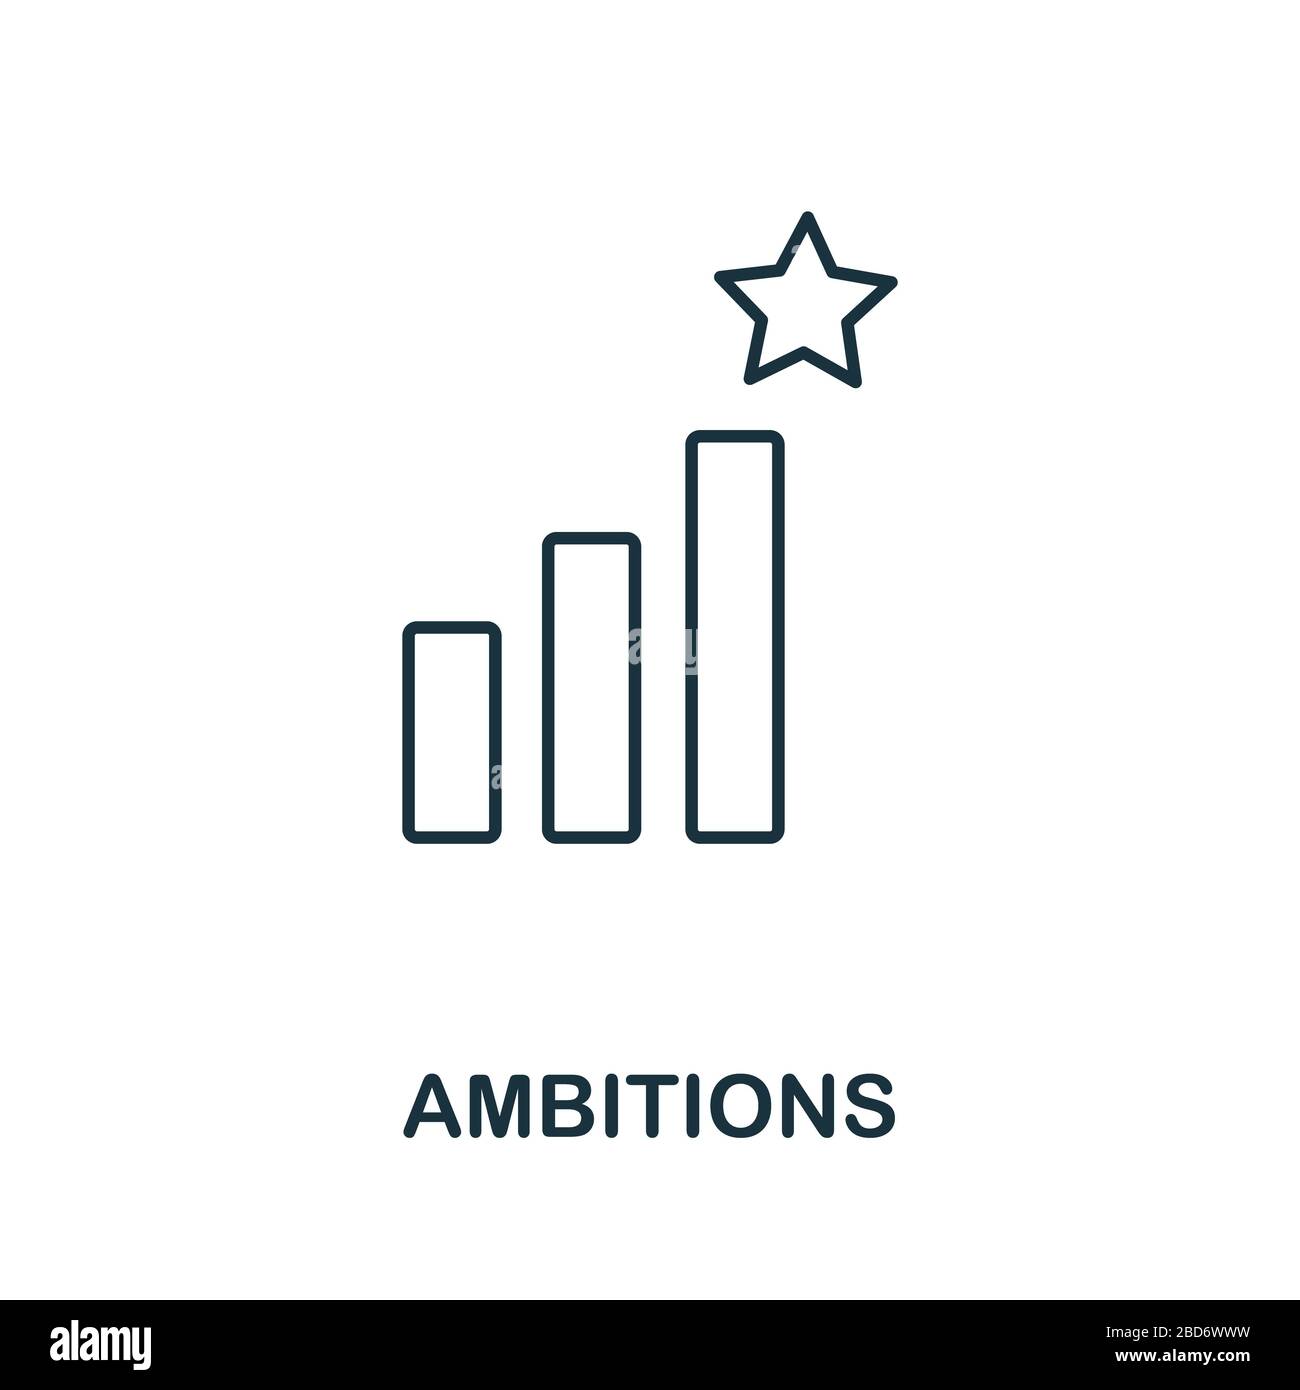 Premium Vector | Ambition logo design with editable slogan branding book and